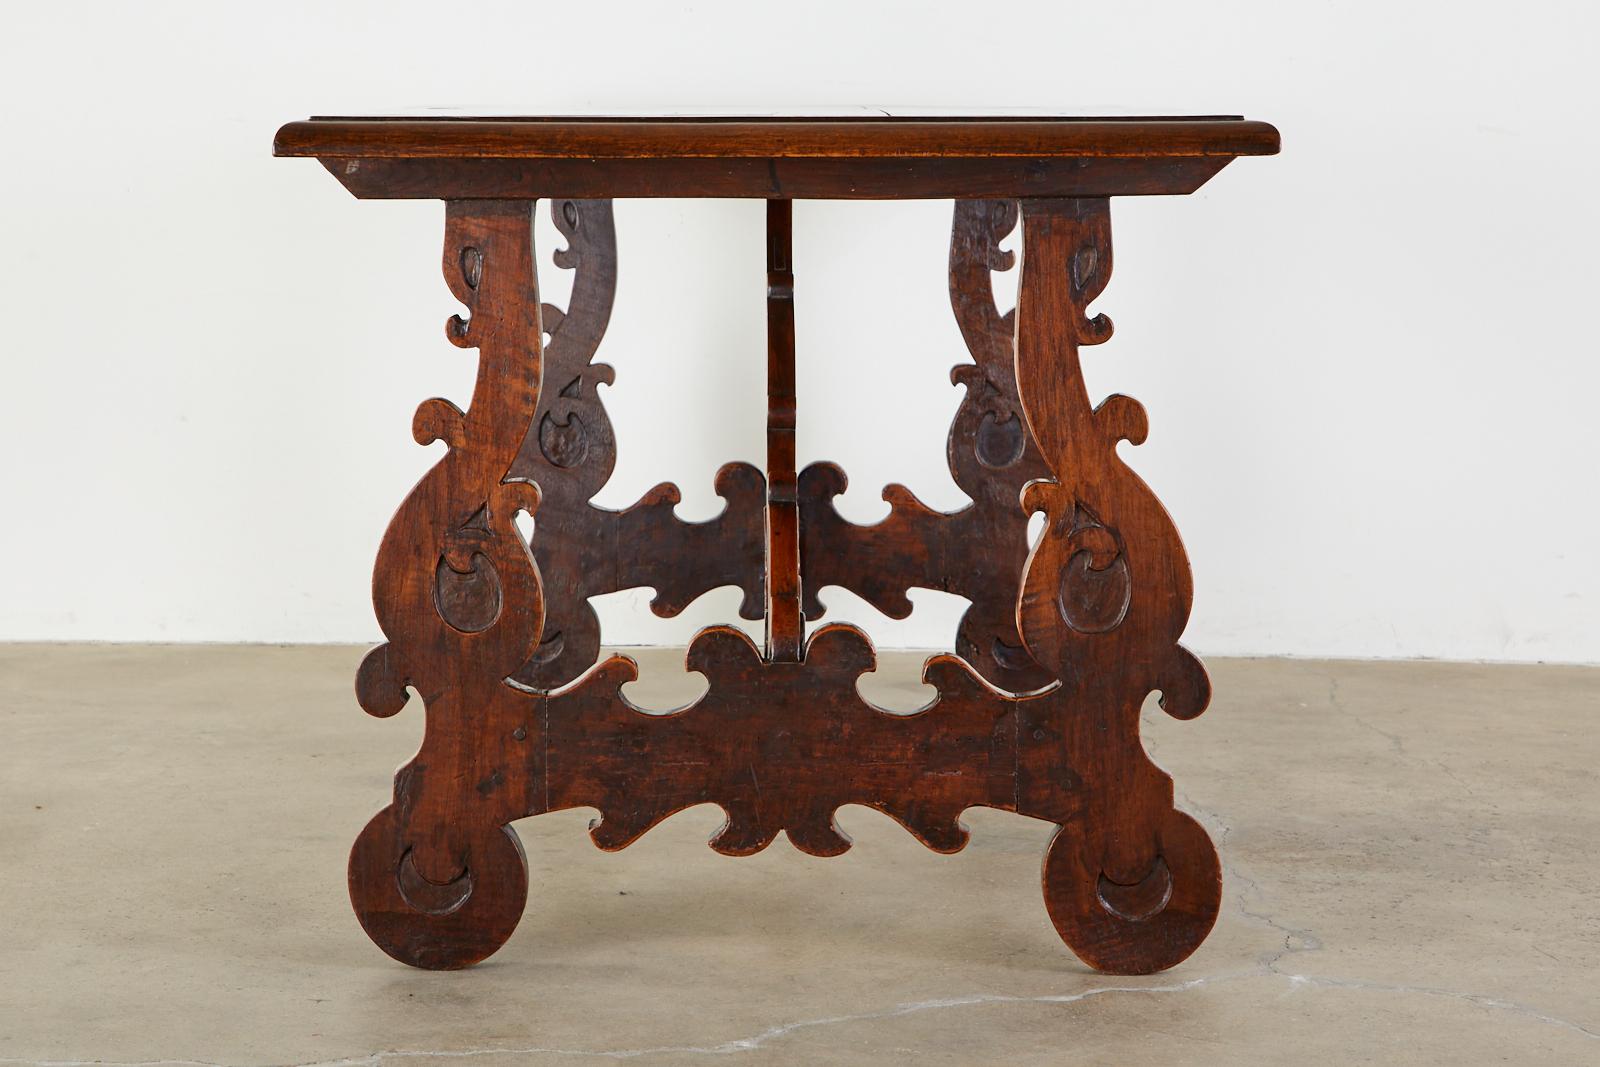 Hand-Crafted 18th Century Italian Baroque Walnut Trestle Dining Table